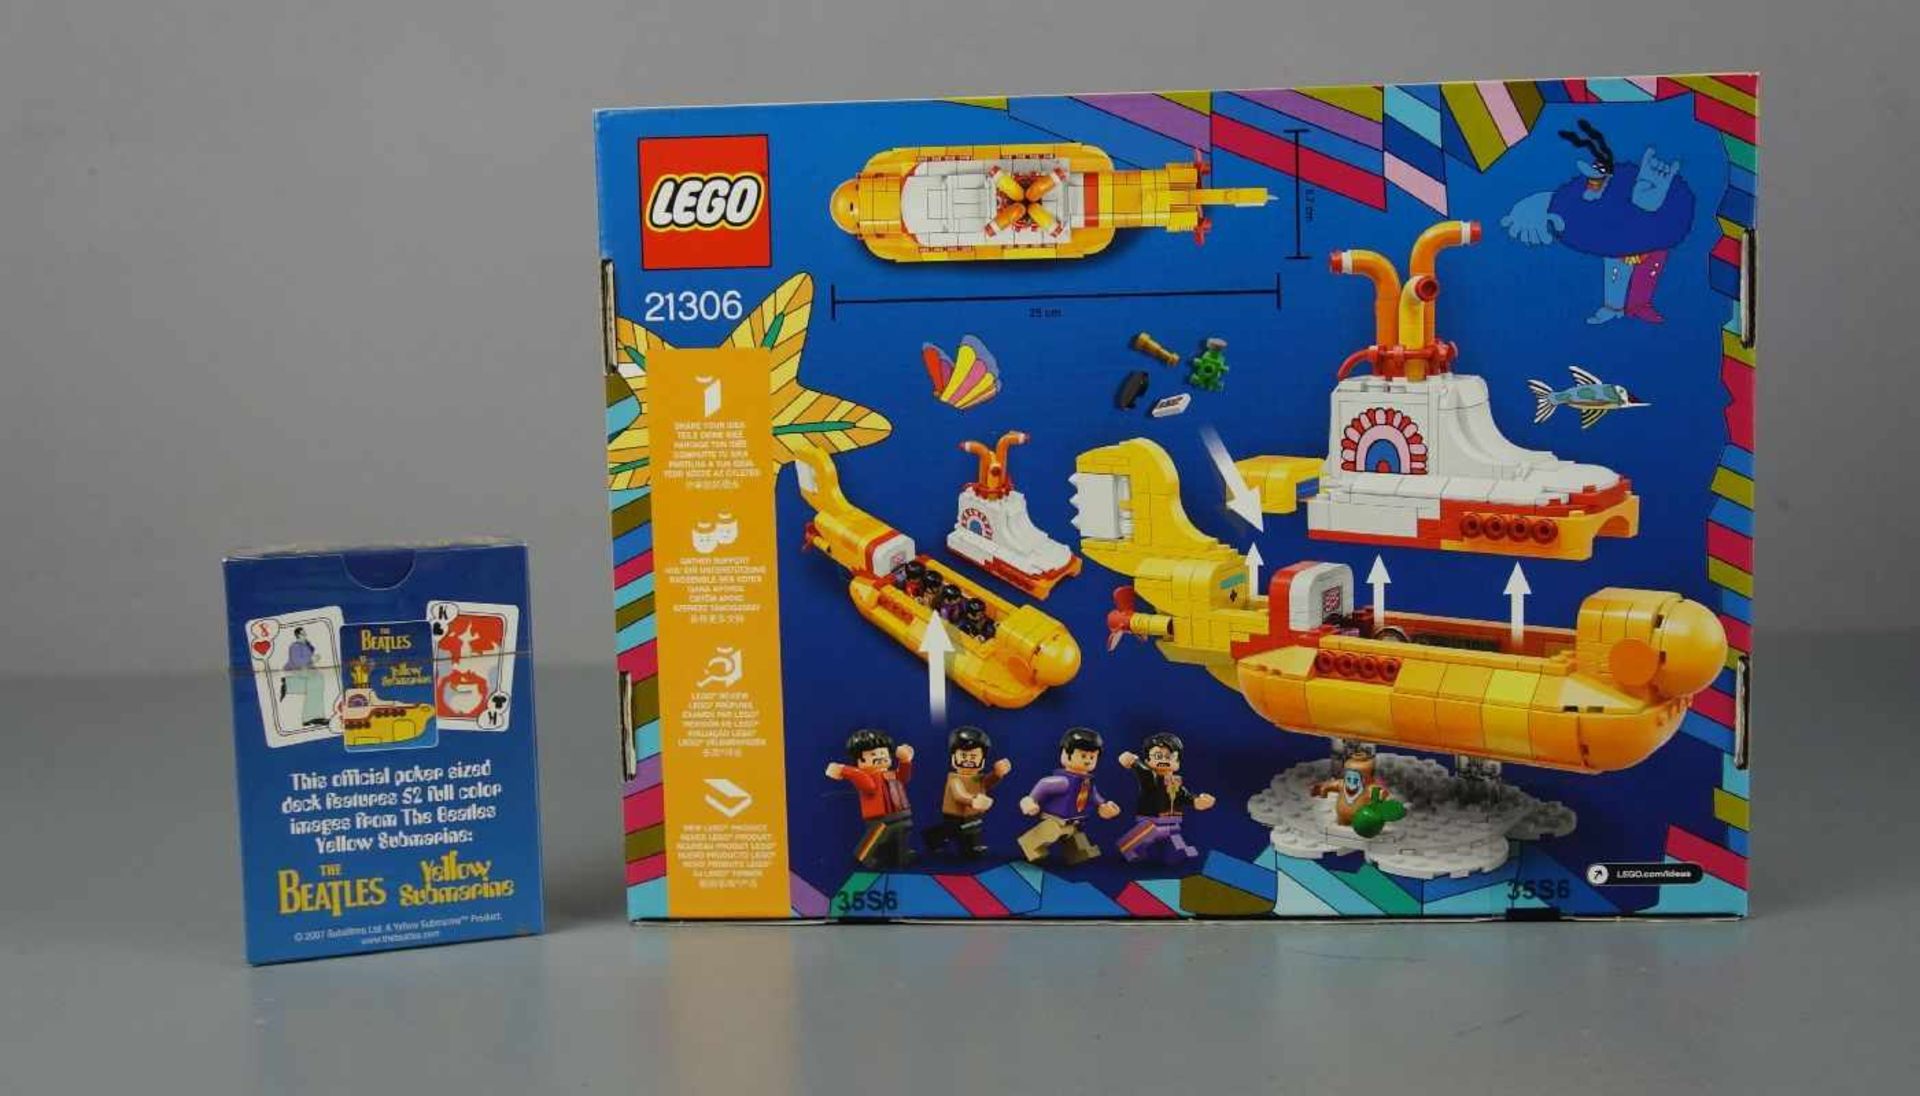 THE BEATLES MERCHANDISE / MEMORABILIA / SPIELZEUG: "Yellow Submarine" - Spielkarten und Lego U-Boot. - Image 2 of 3